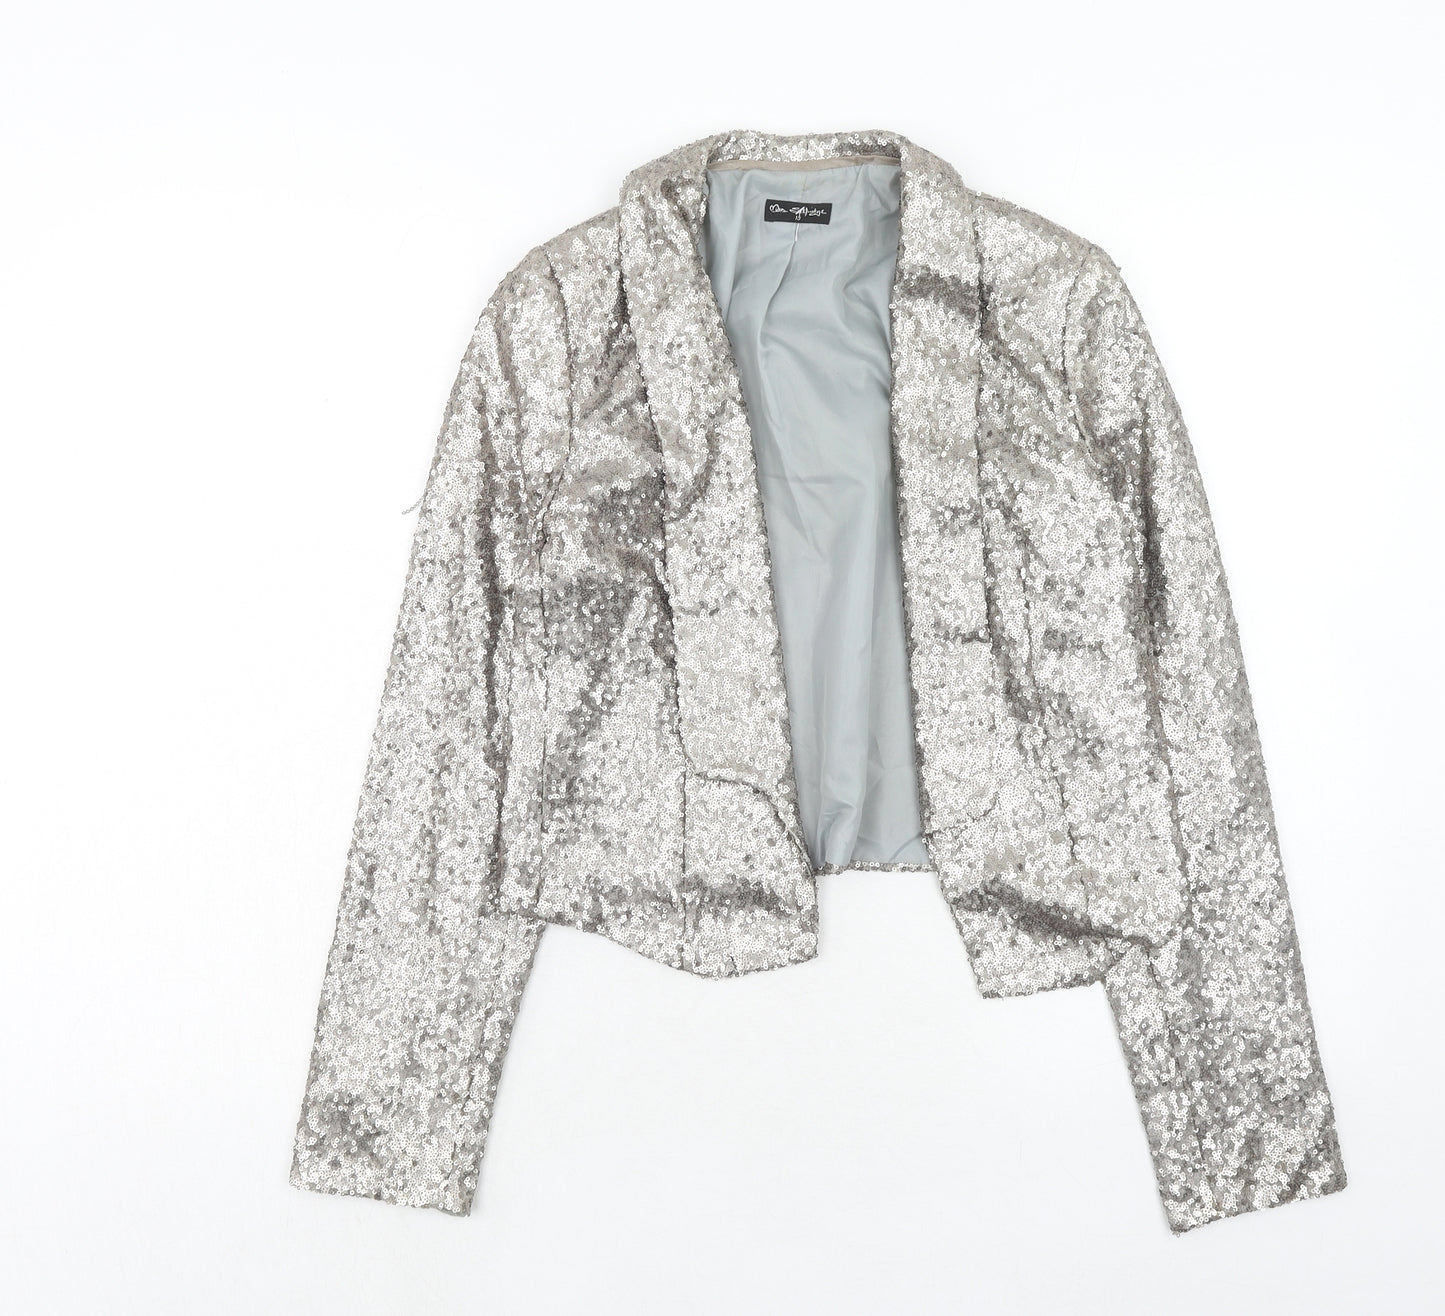 Miss Selfridge Womens Silver Polyester Jacket Blazer Size 10 - Sparkly, Sequins